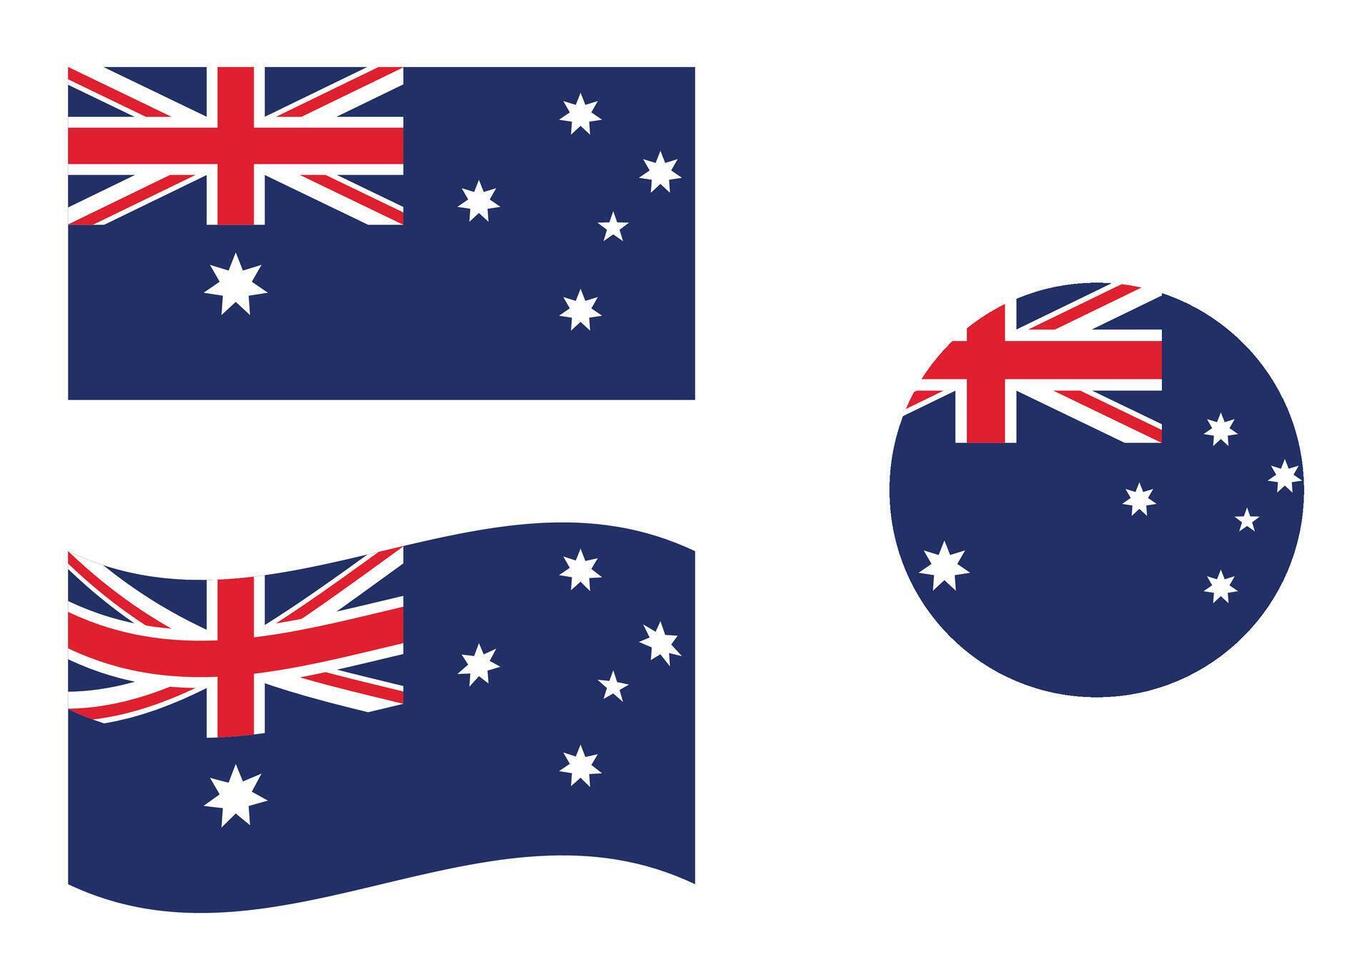 Flagge von Australien. Australien Flagge im Kreis Form. Land Flagge Variationen vektor